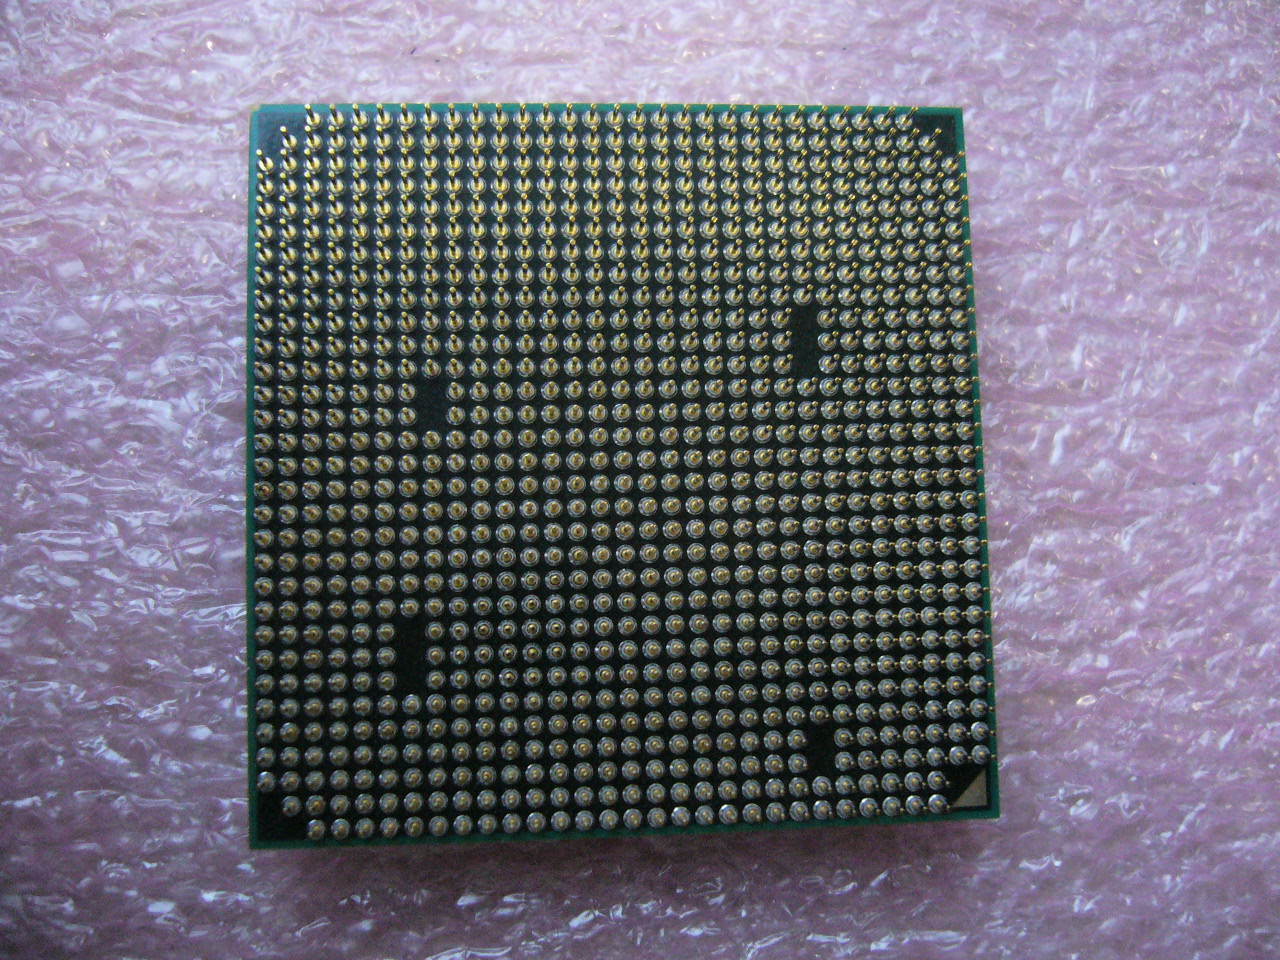 QTY 1x AMD Athlon II X3 435 2.9 GHz Triple-Core (ADX435WFK32GM) CPU AM3 938-Pin - Click Image to Close